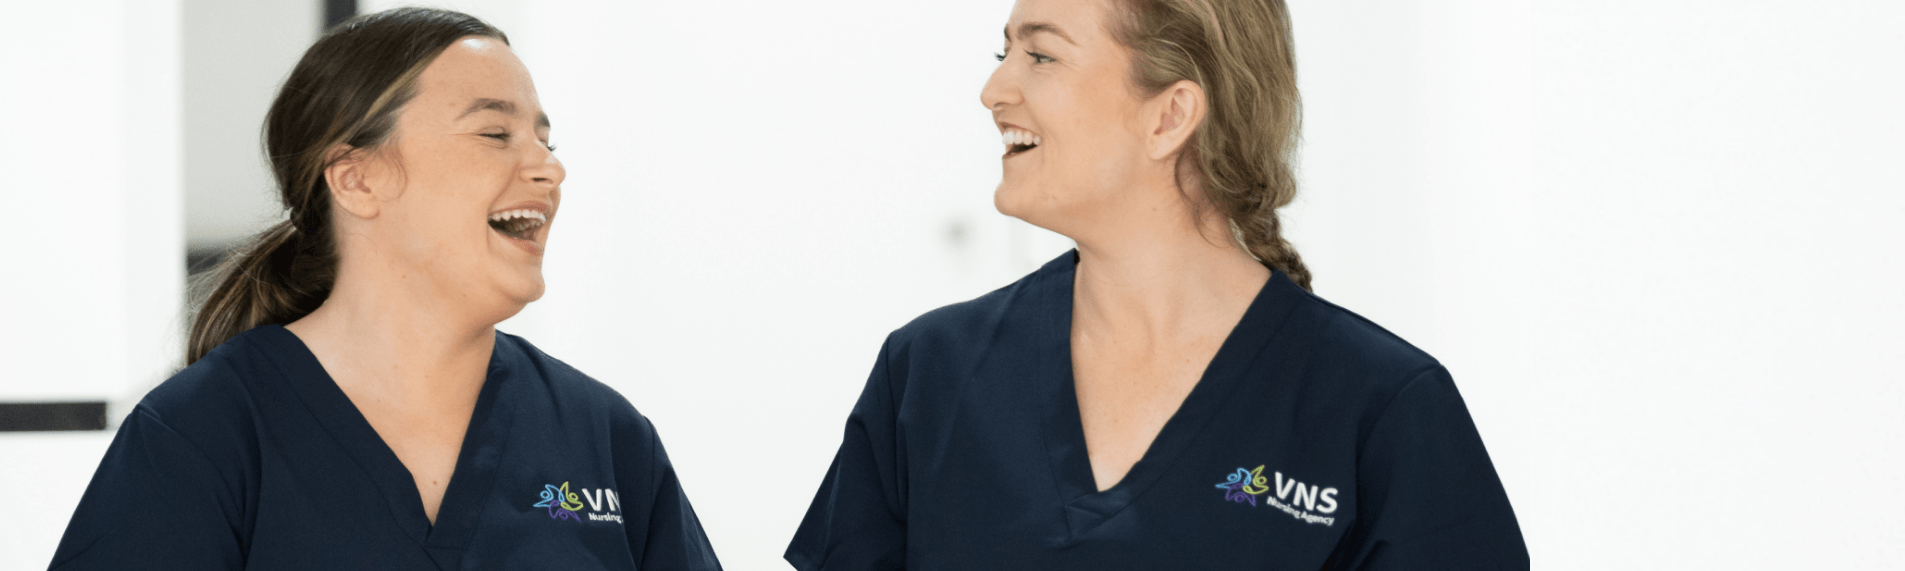 nursing research jobs melbourne